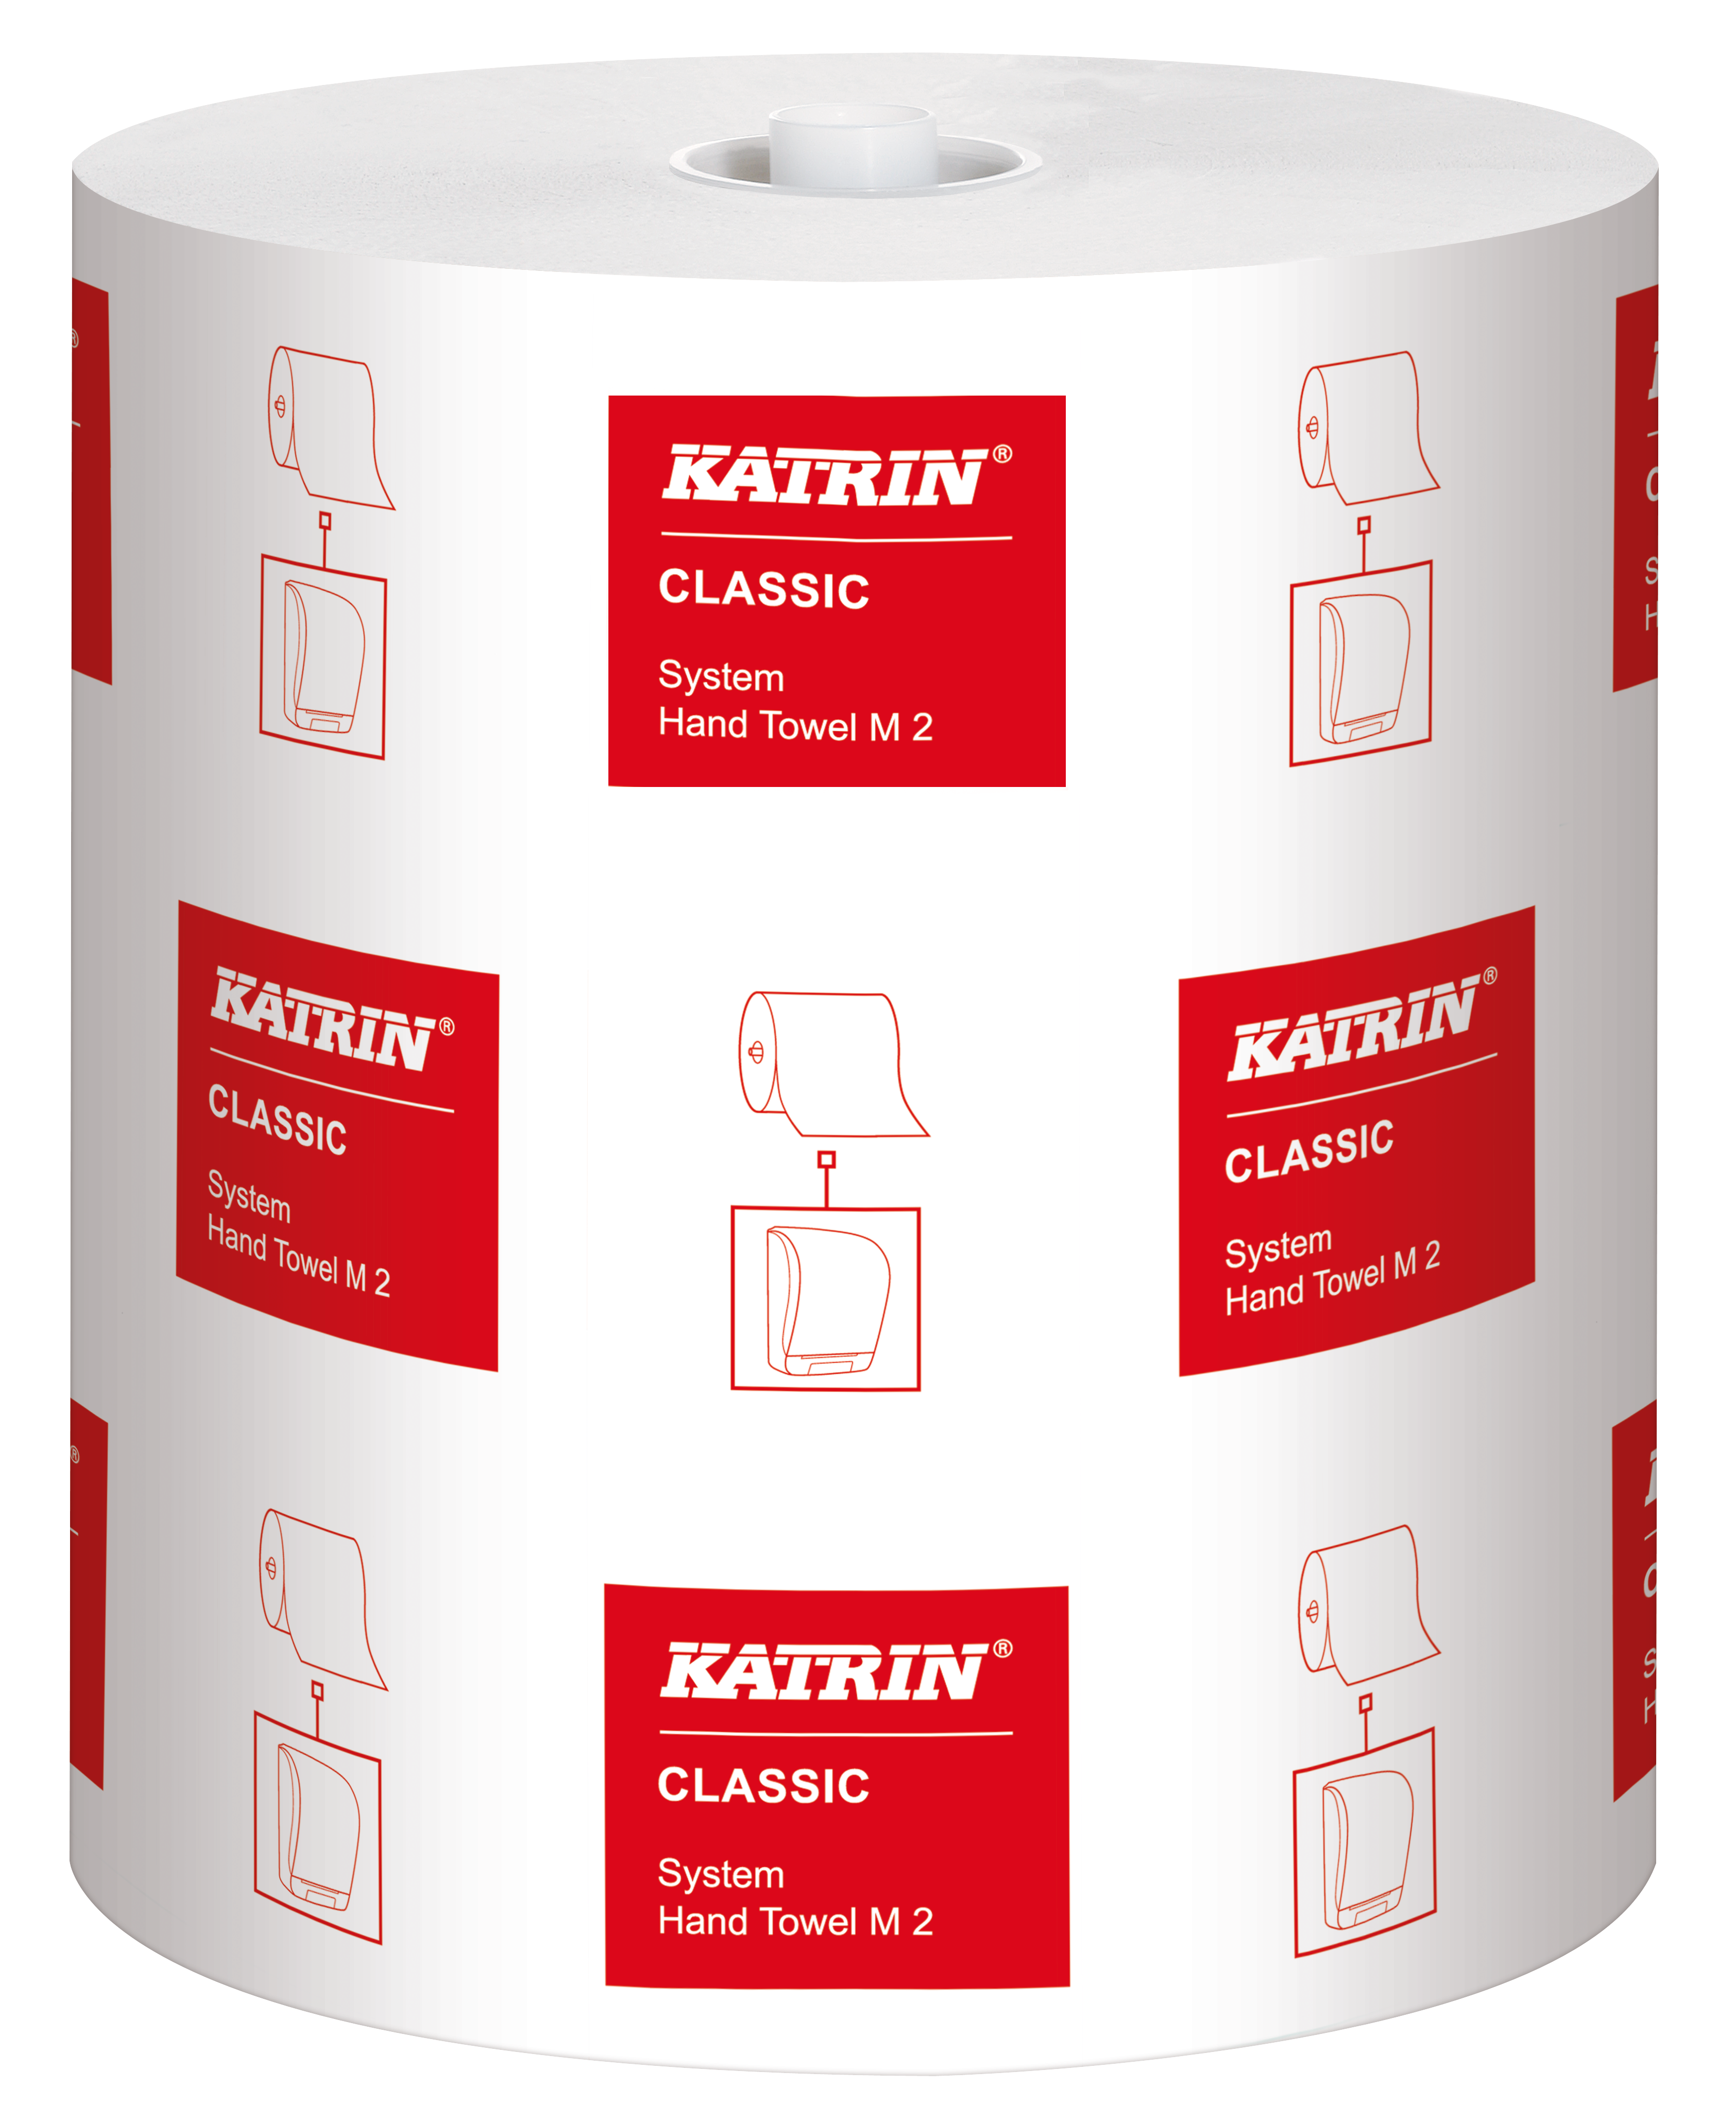 Katrin Classic System Towel M2